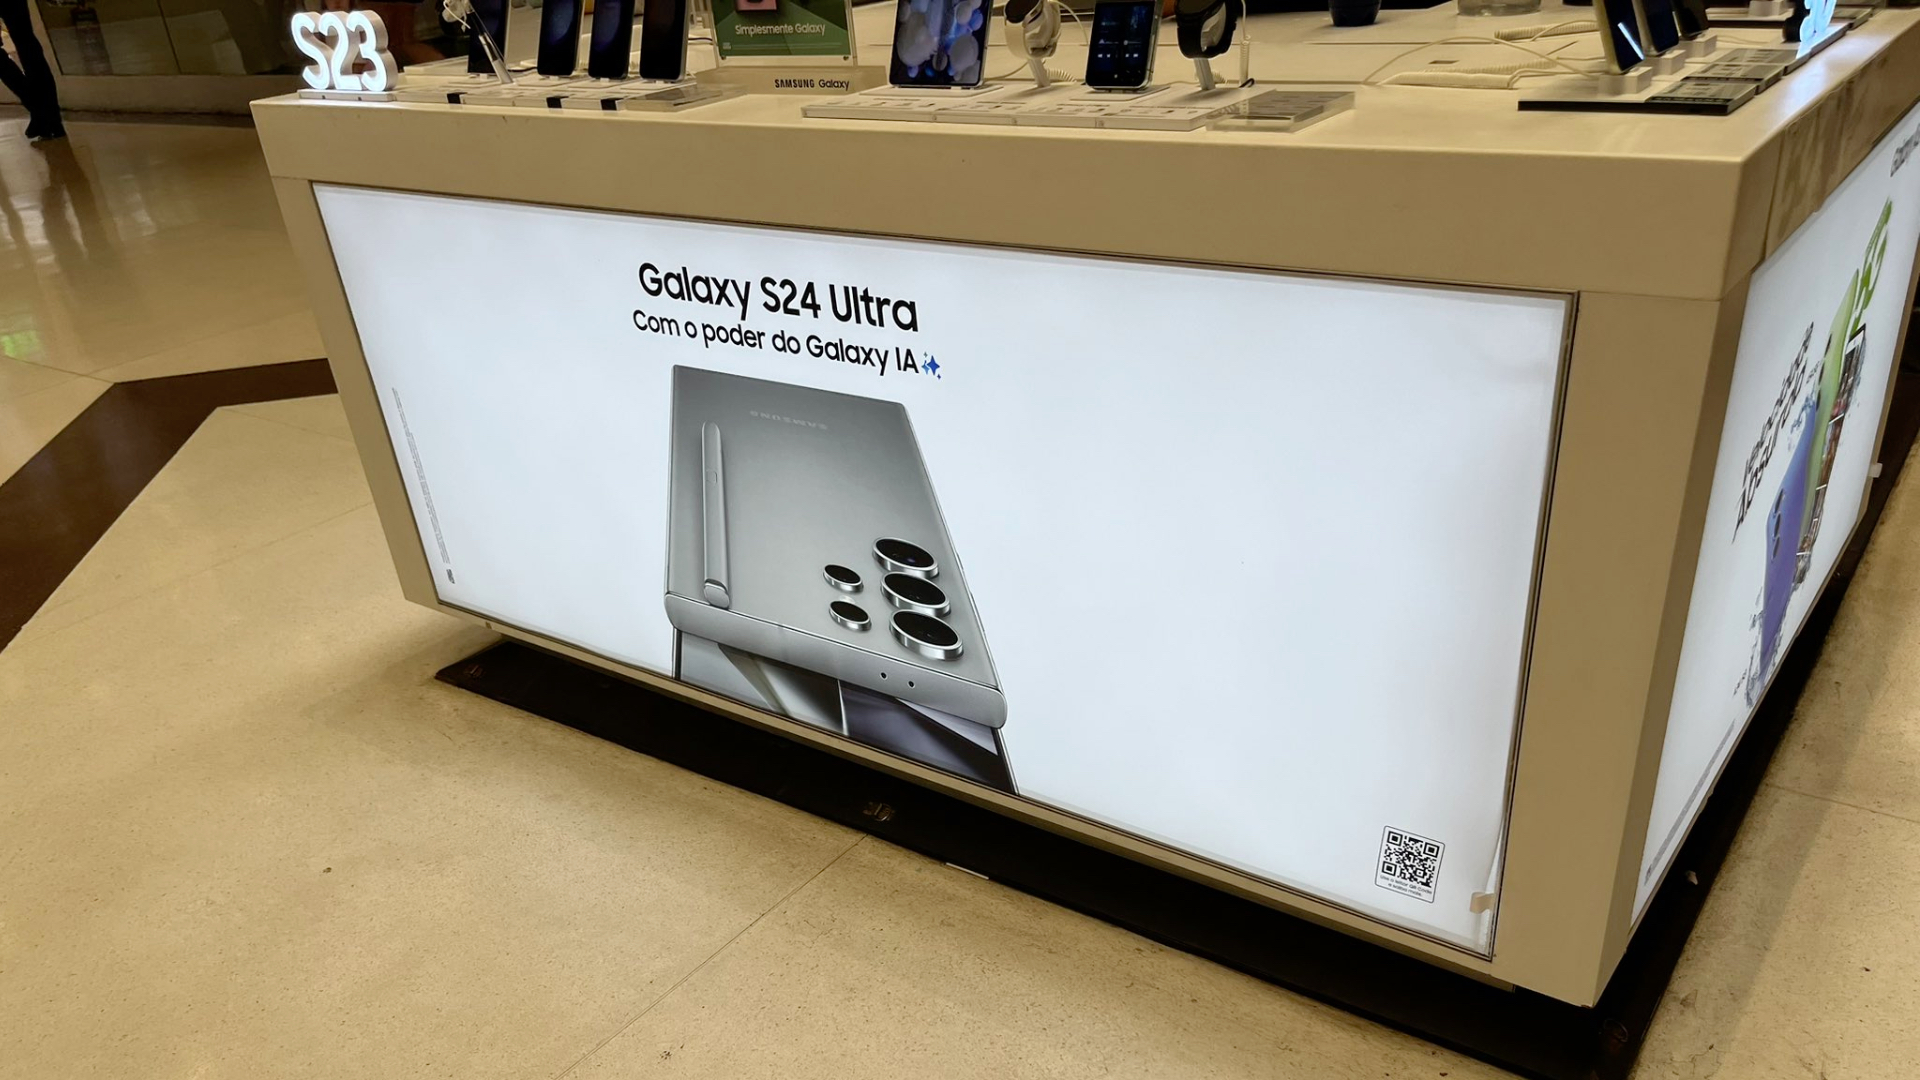 Samsung Galaxy S24 Ultra leaks via marketing posters in Brazil - SamMobile